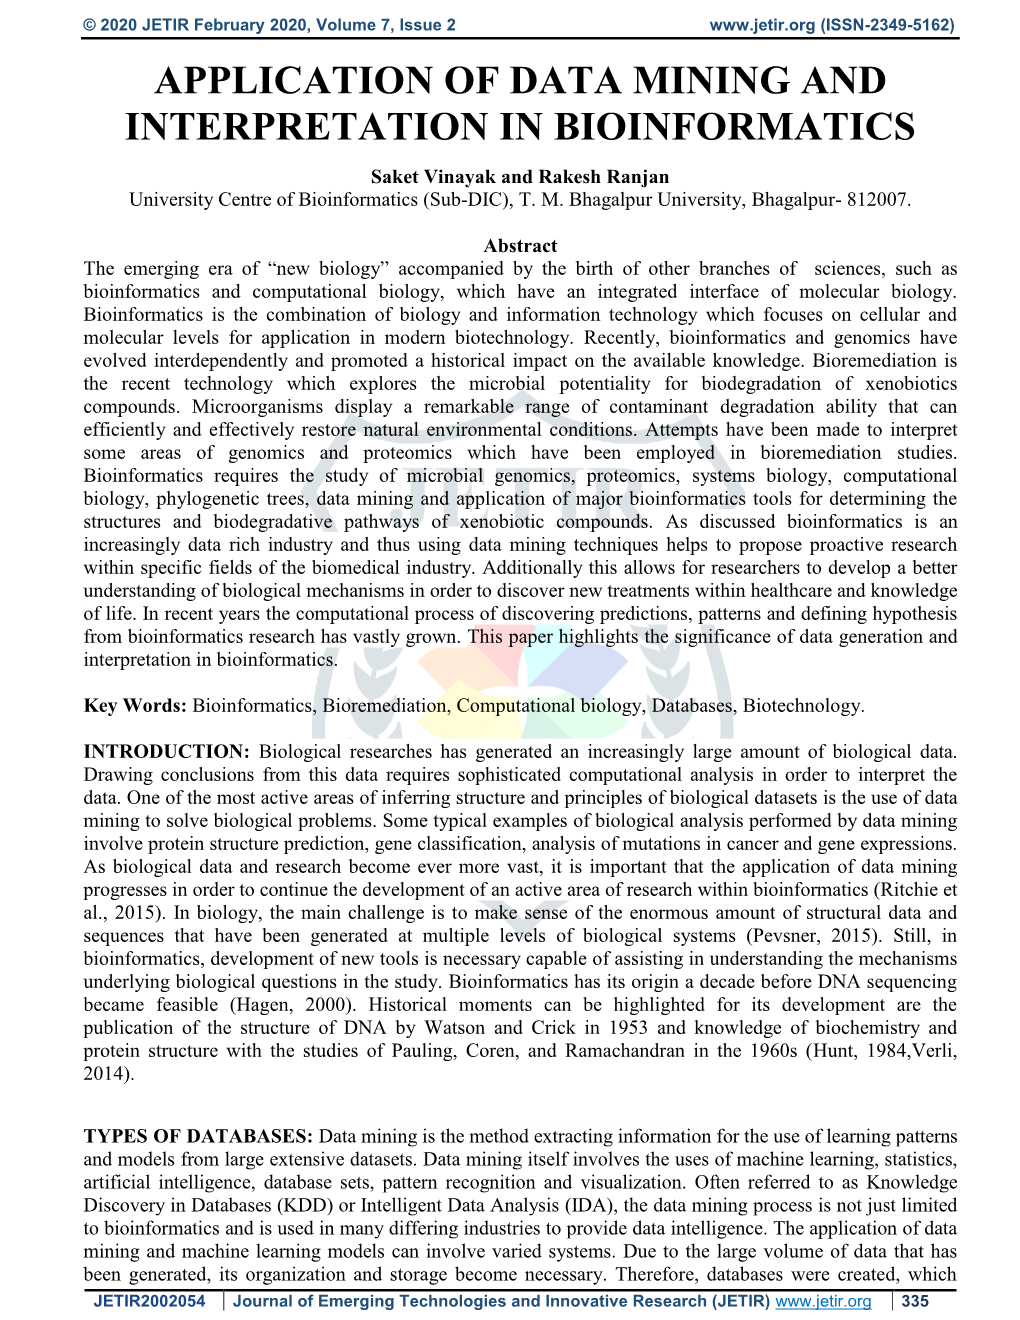 APPLICATION of DATA MINING and INTERPRETATION in BIOINFORMATICS Saket Vinayak and Rakesh Ranjan University Centre of Bioinformatics (Sub-DIC), T